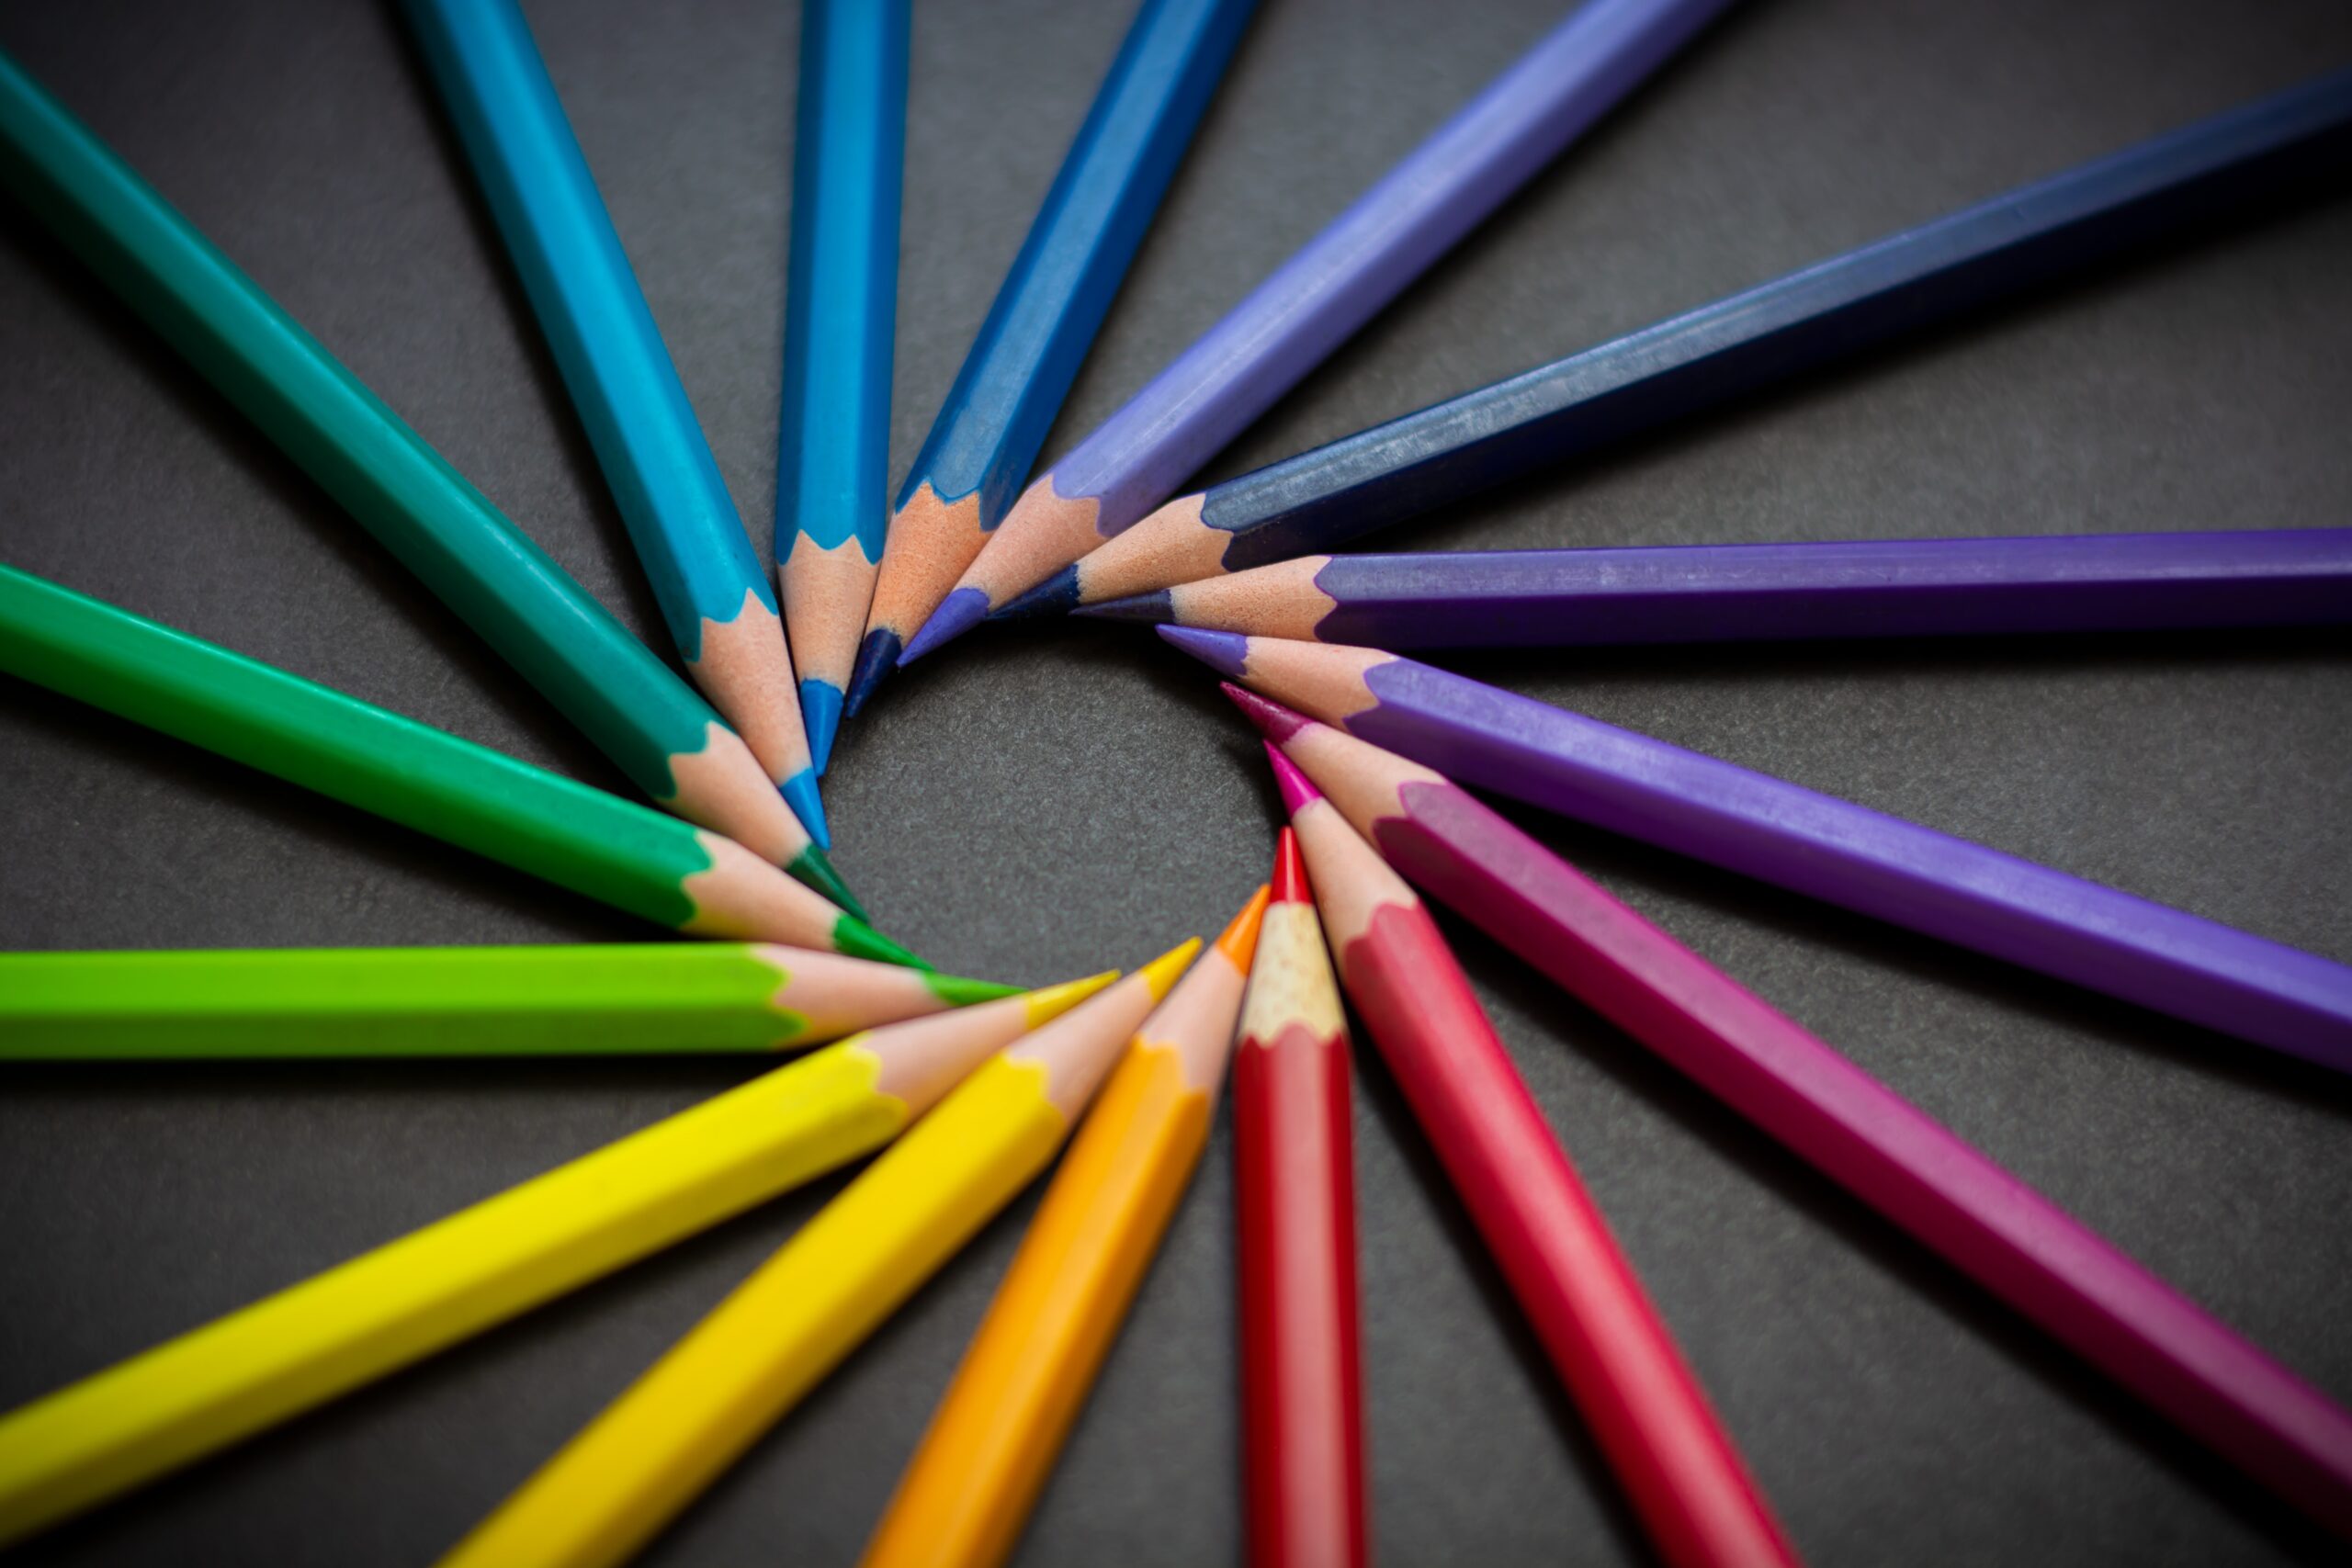 Image of color pencils